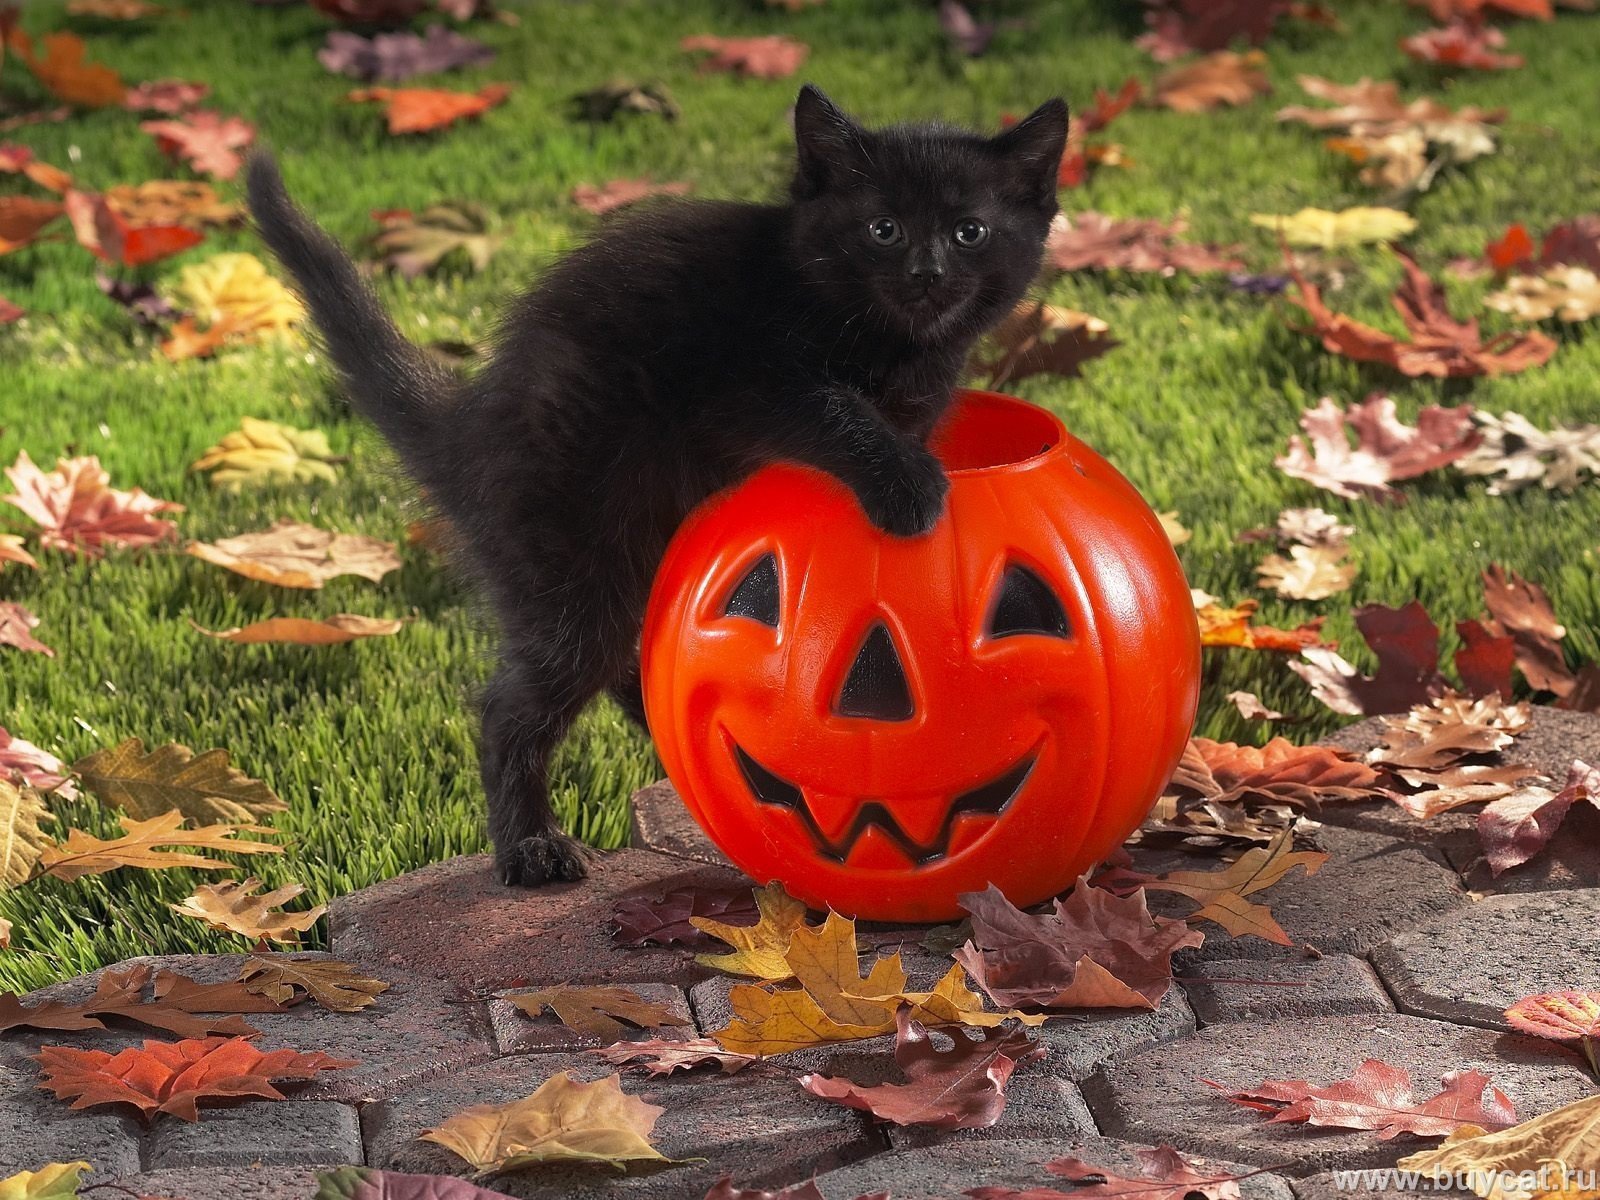 Black Cat Celebrates Halloween Wallpaper And Image